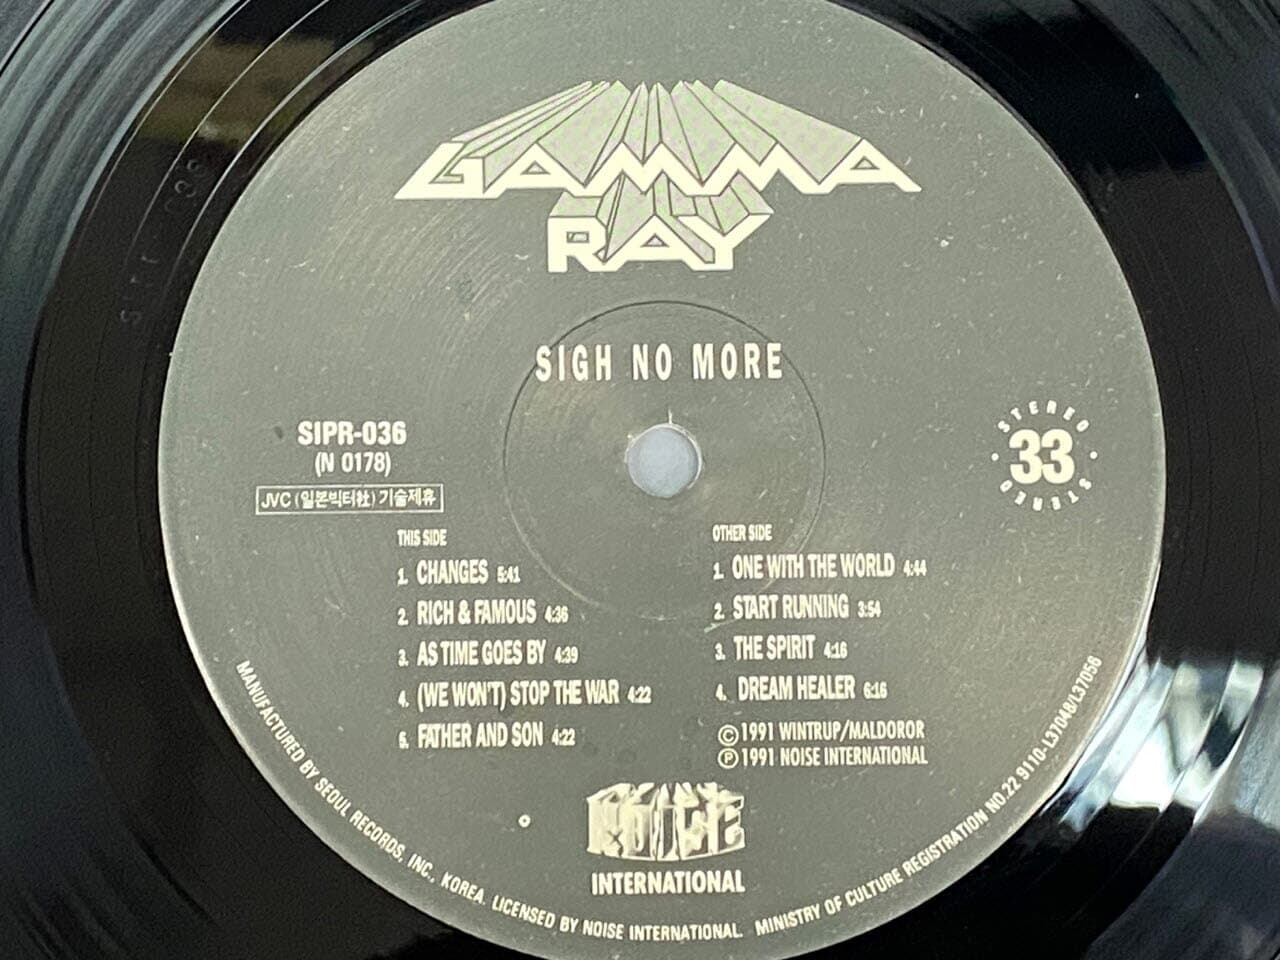 [LP] 감마 레이 - Gamma Ray - Sigh No More LP [서울-라이센스반]